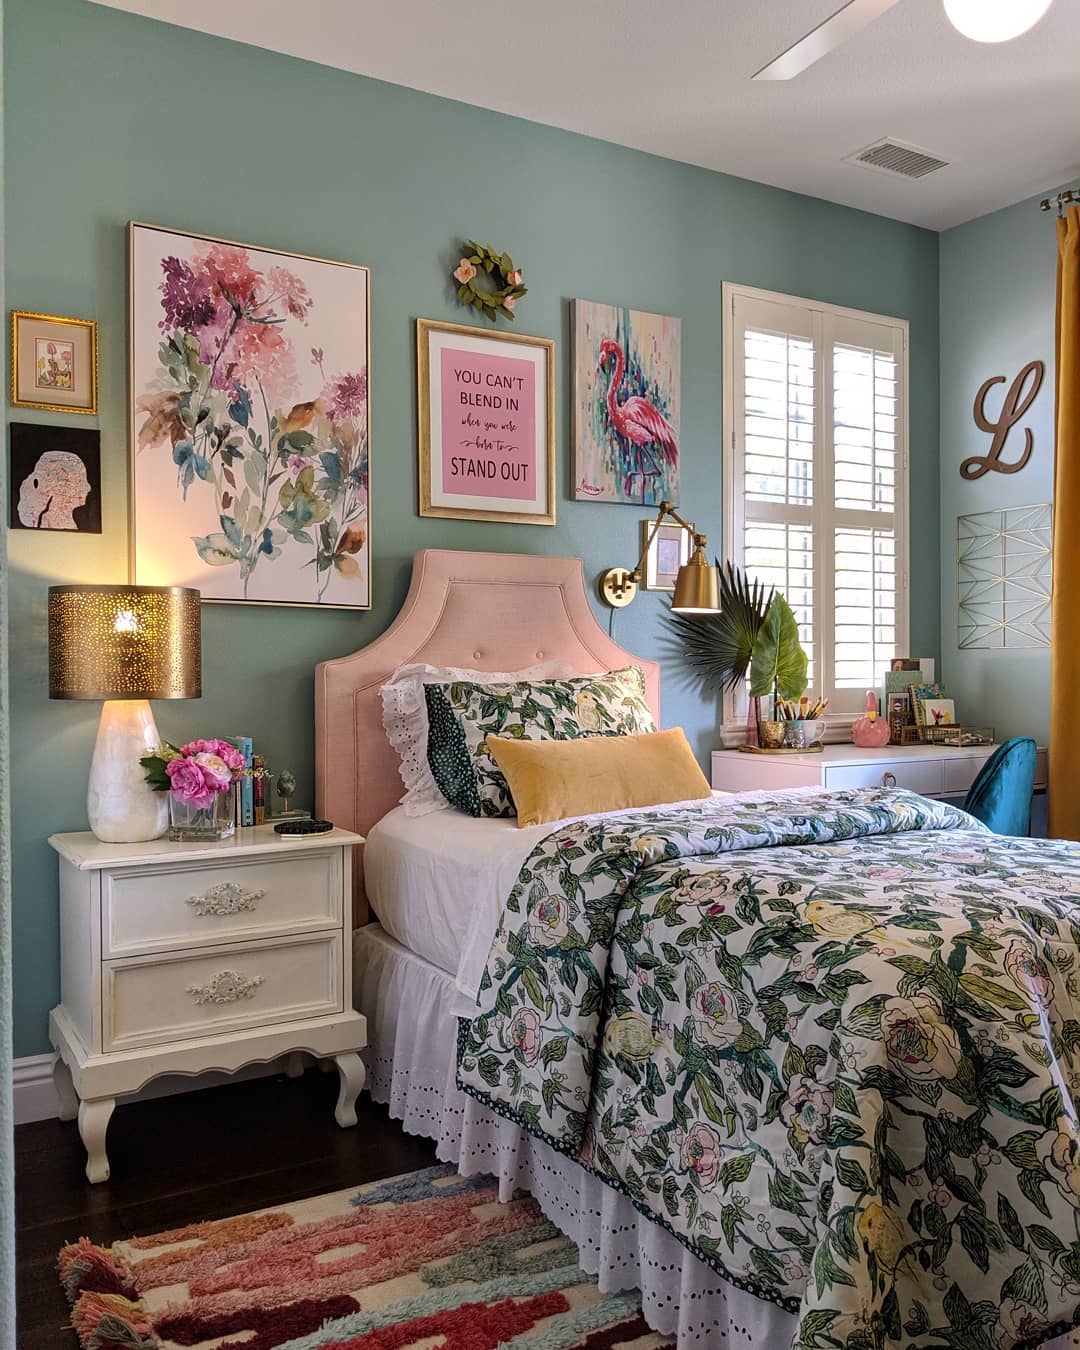 Well-designed floral teen bedroom. Photo by Instagram user @tereza_sparks_design